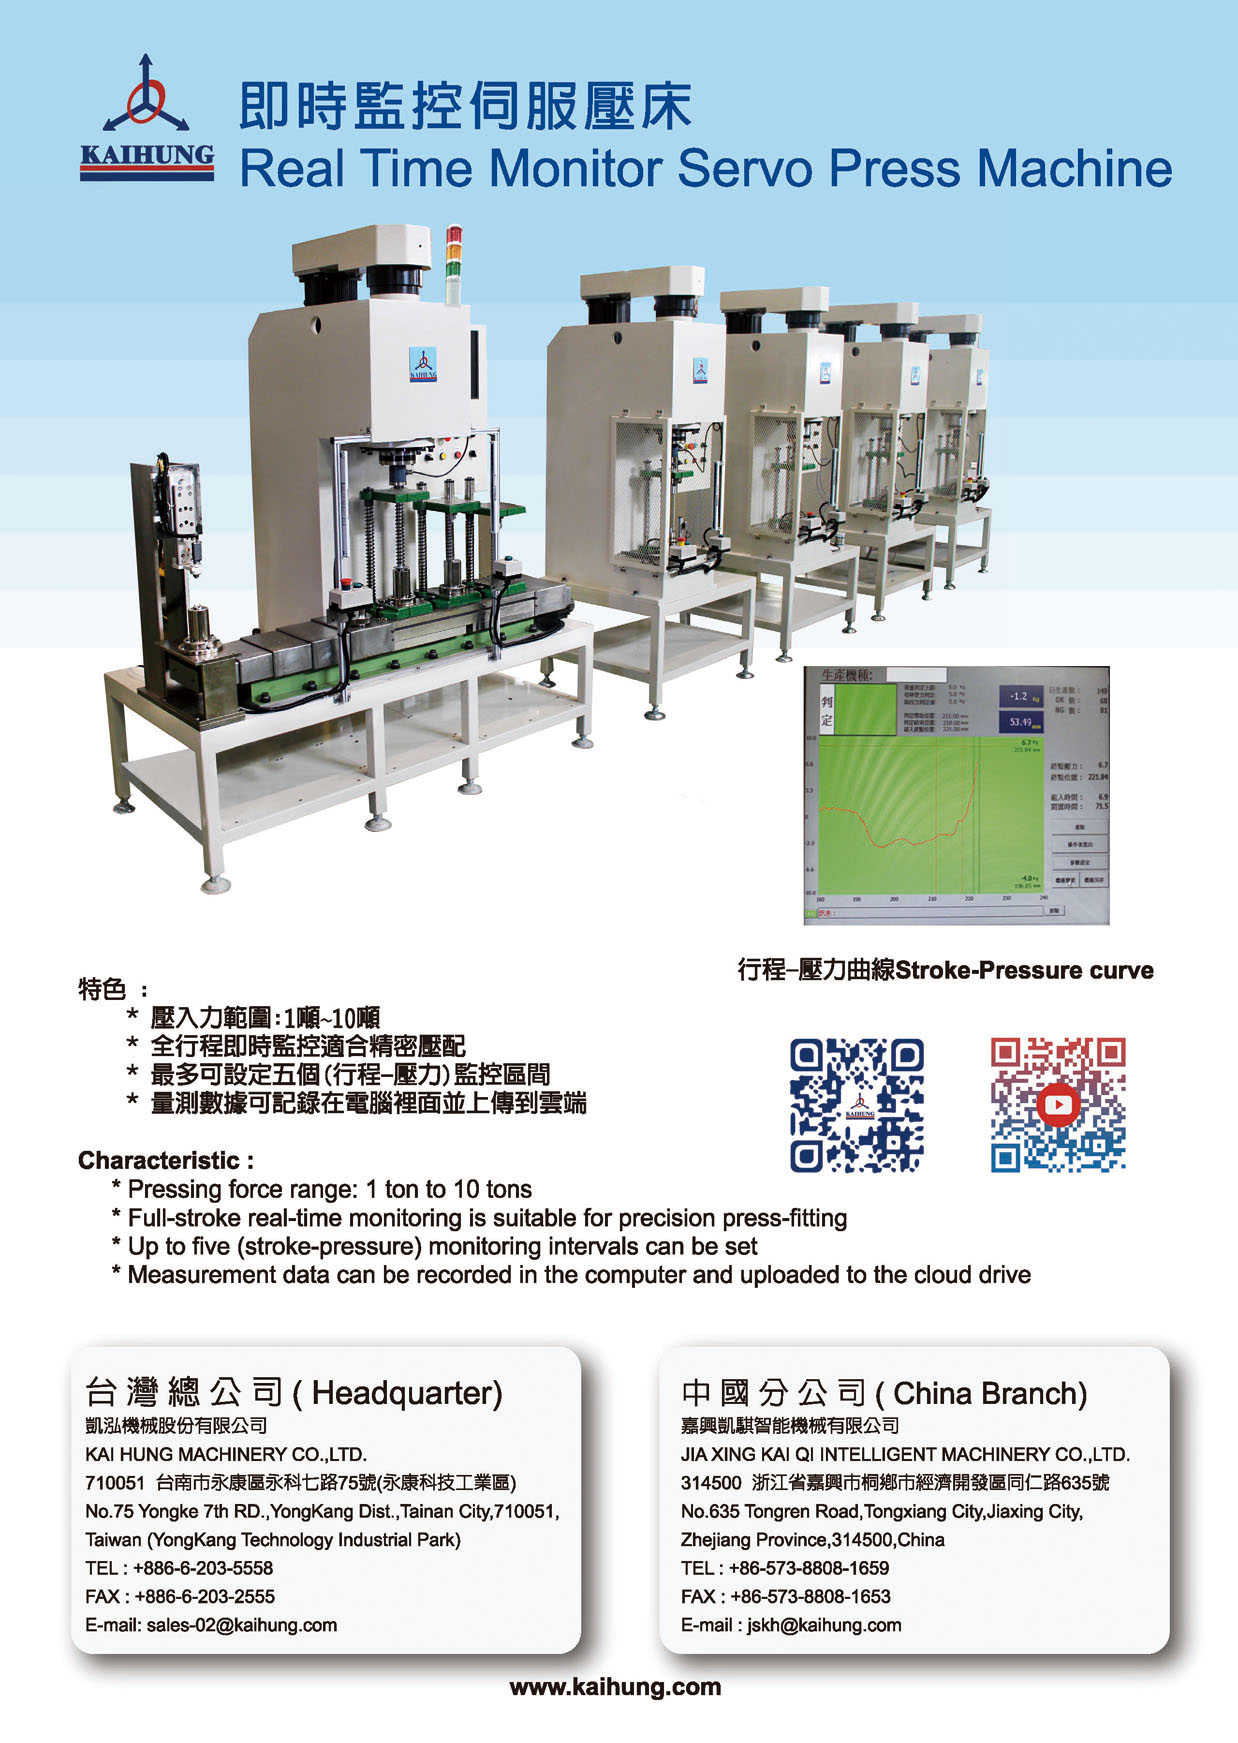 Who Makes Machinery in Taiwan KAI HUNG MACHINERY CO., LTD.